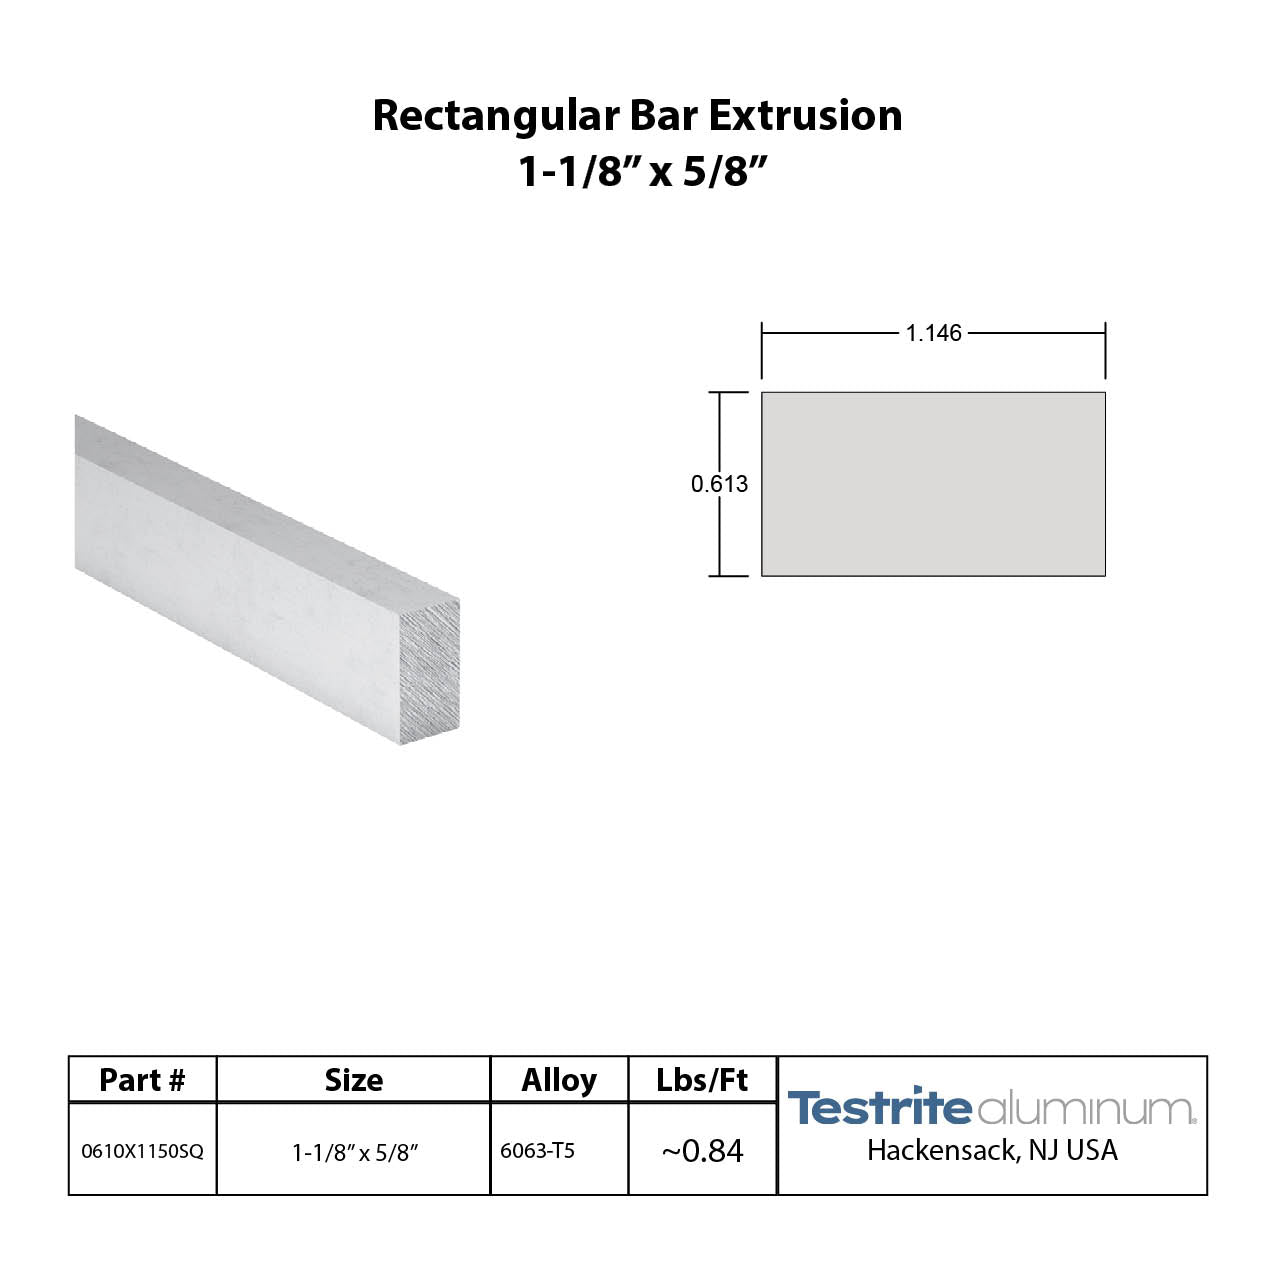 Aluminum rectangle solid bar 5/8" x between 1-1/8" and 1-3/16"